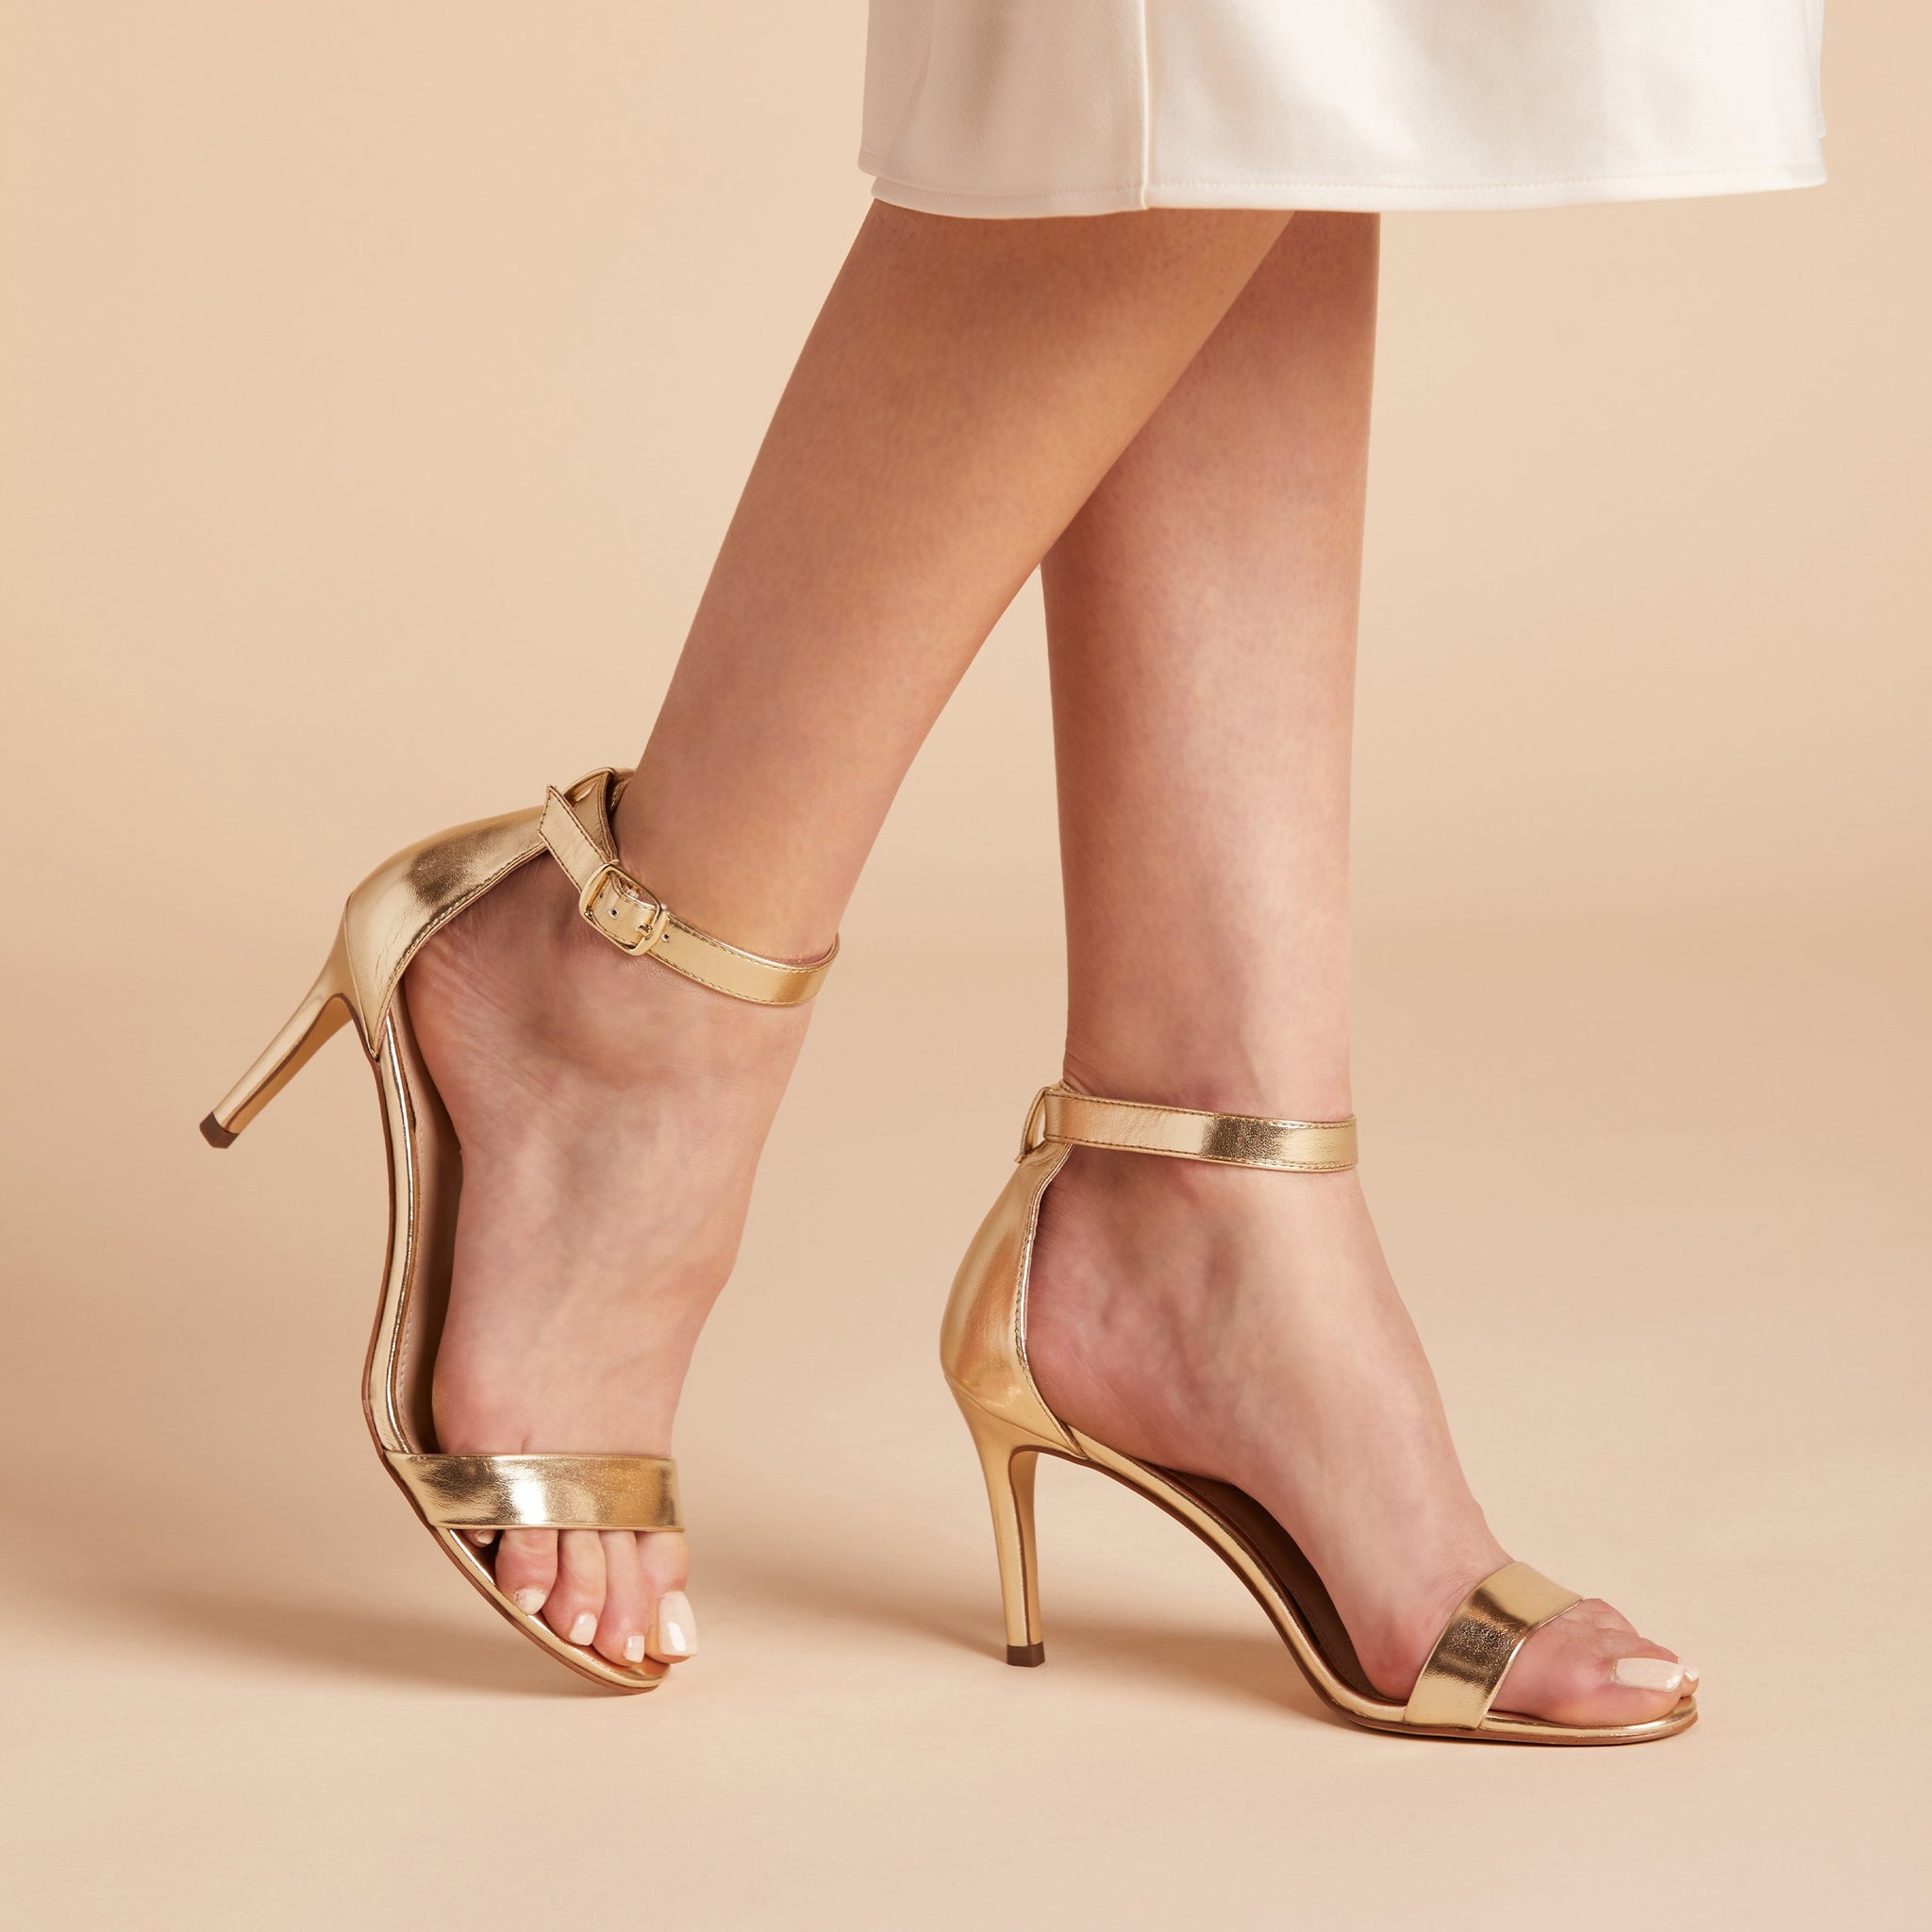 Jenny Stiletto Heel in gold by Birdy Grey, side view